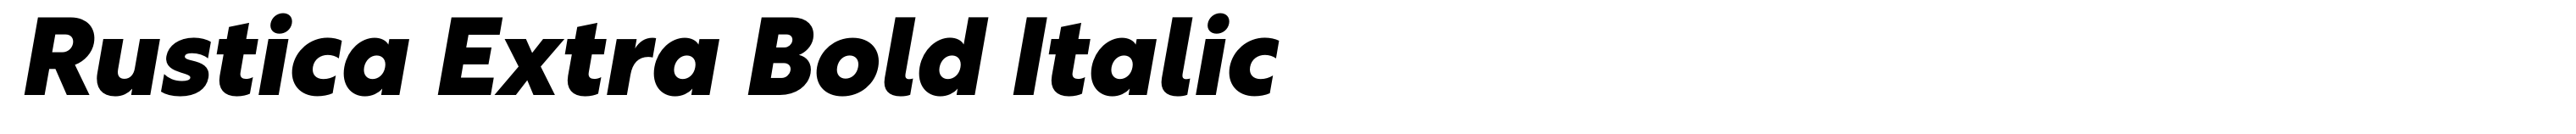 Rustica Extra Bold Italic